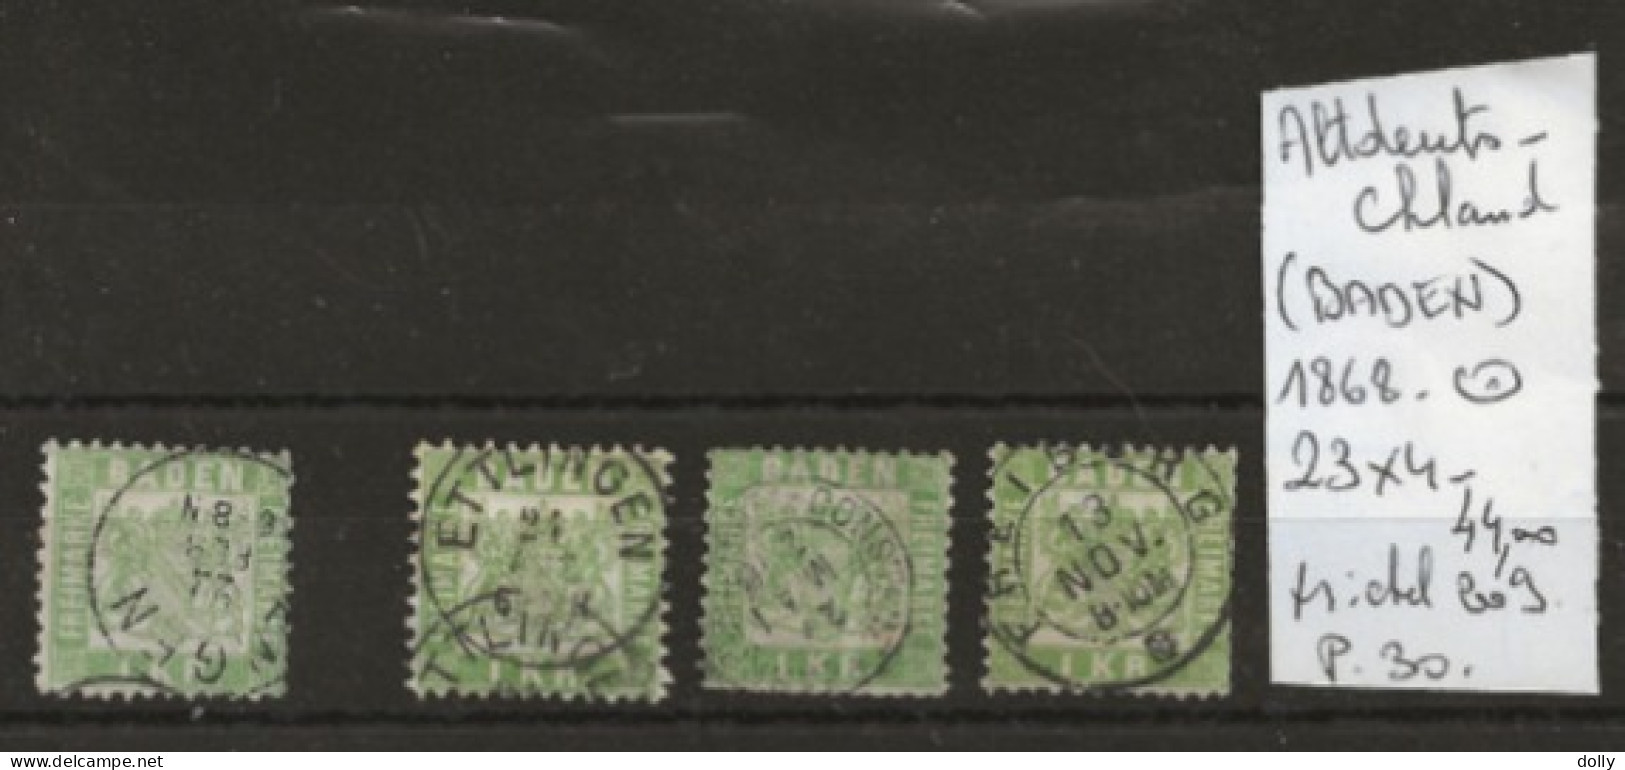 TIMBRE D ALLEMAGNE ALTDEUTSCHLAND 1868 (BADEN) Nr 23 X 4 COTE 44,00  € - Mint